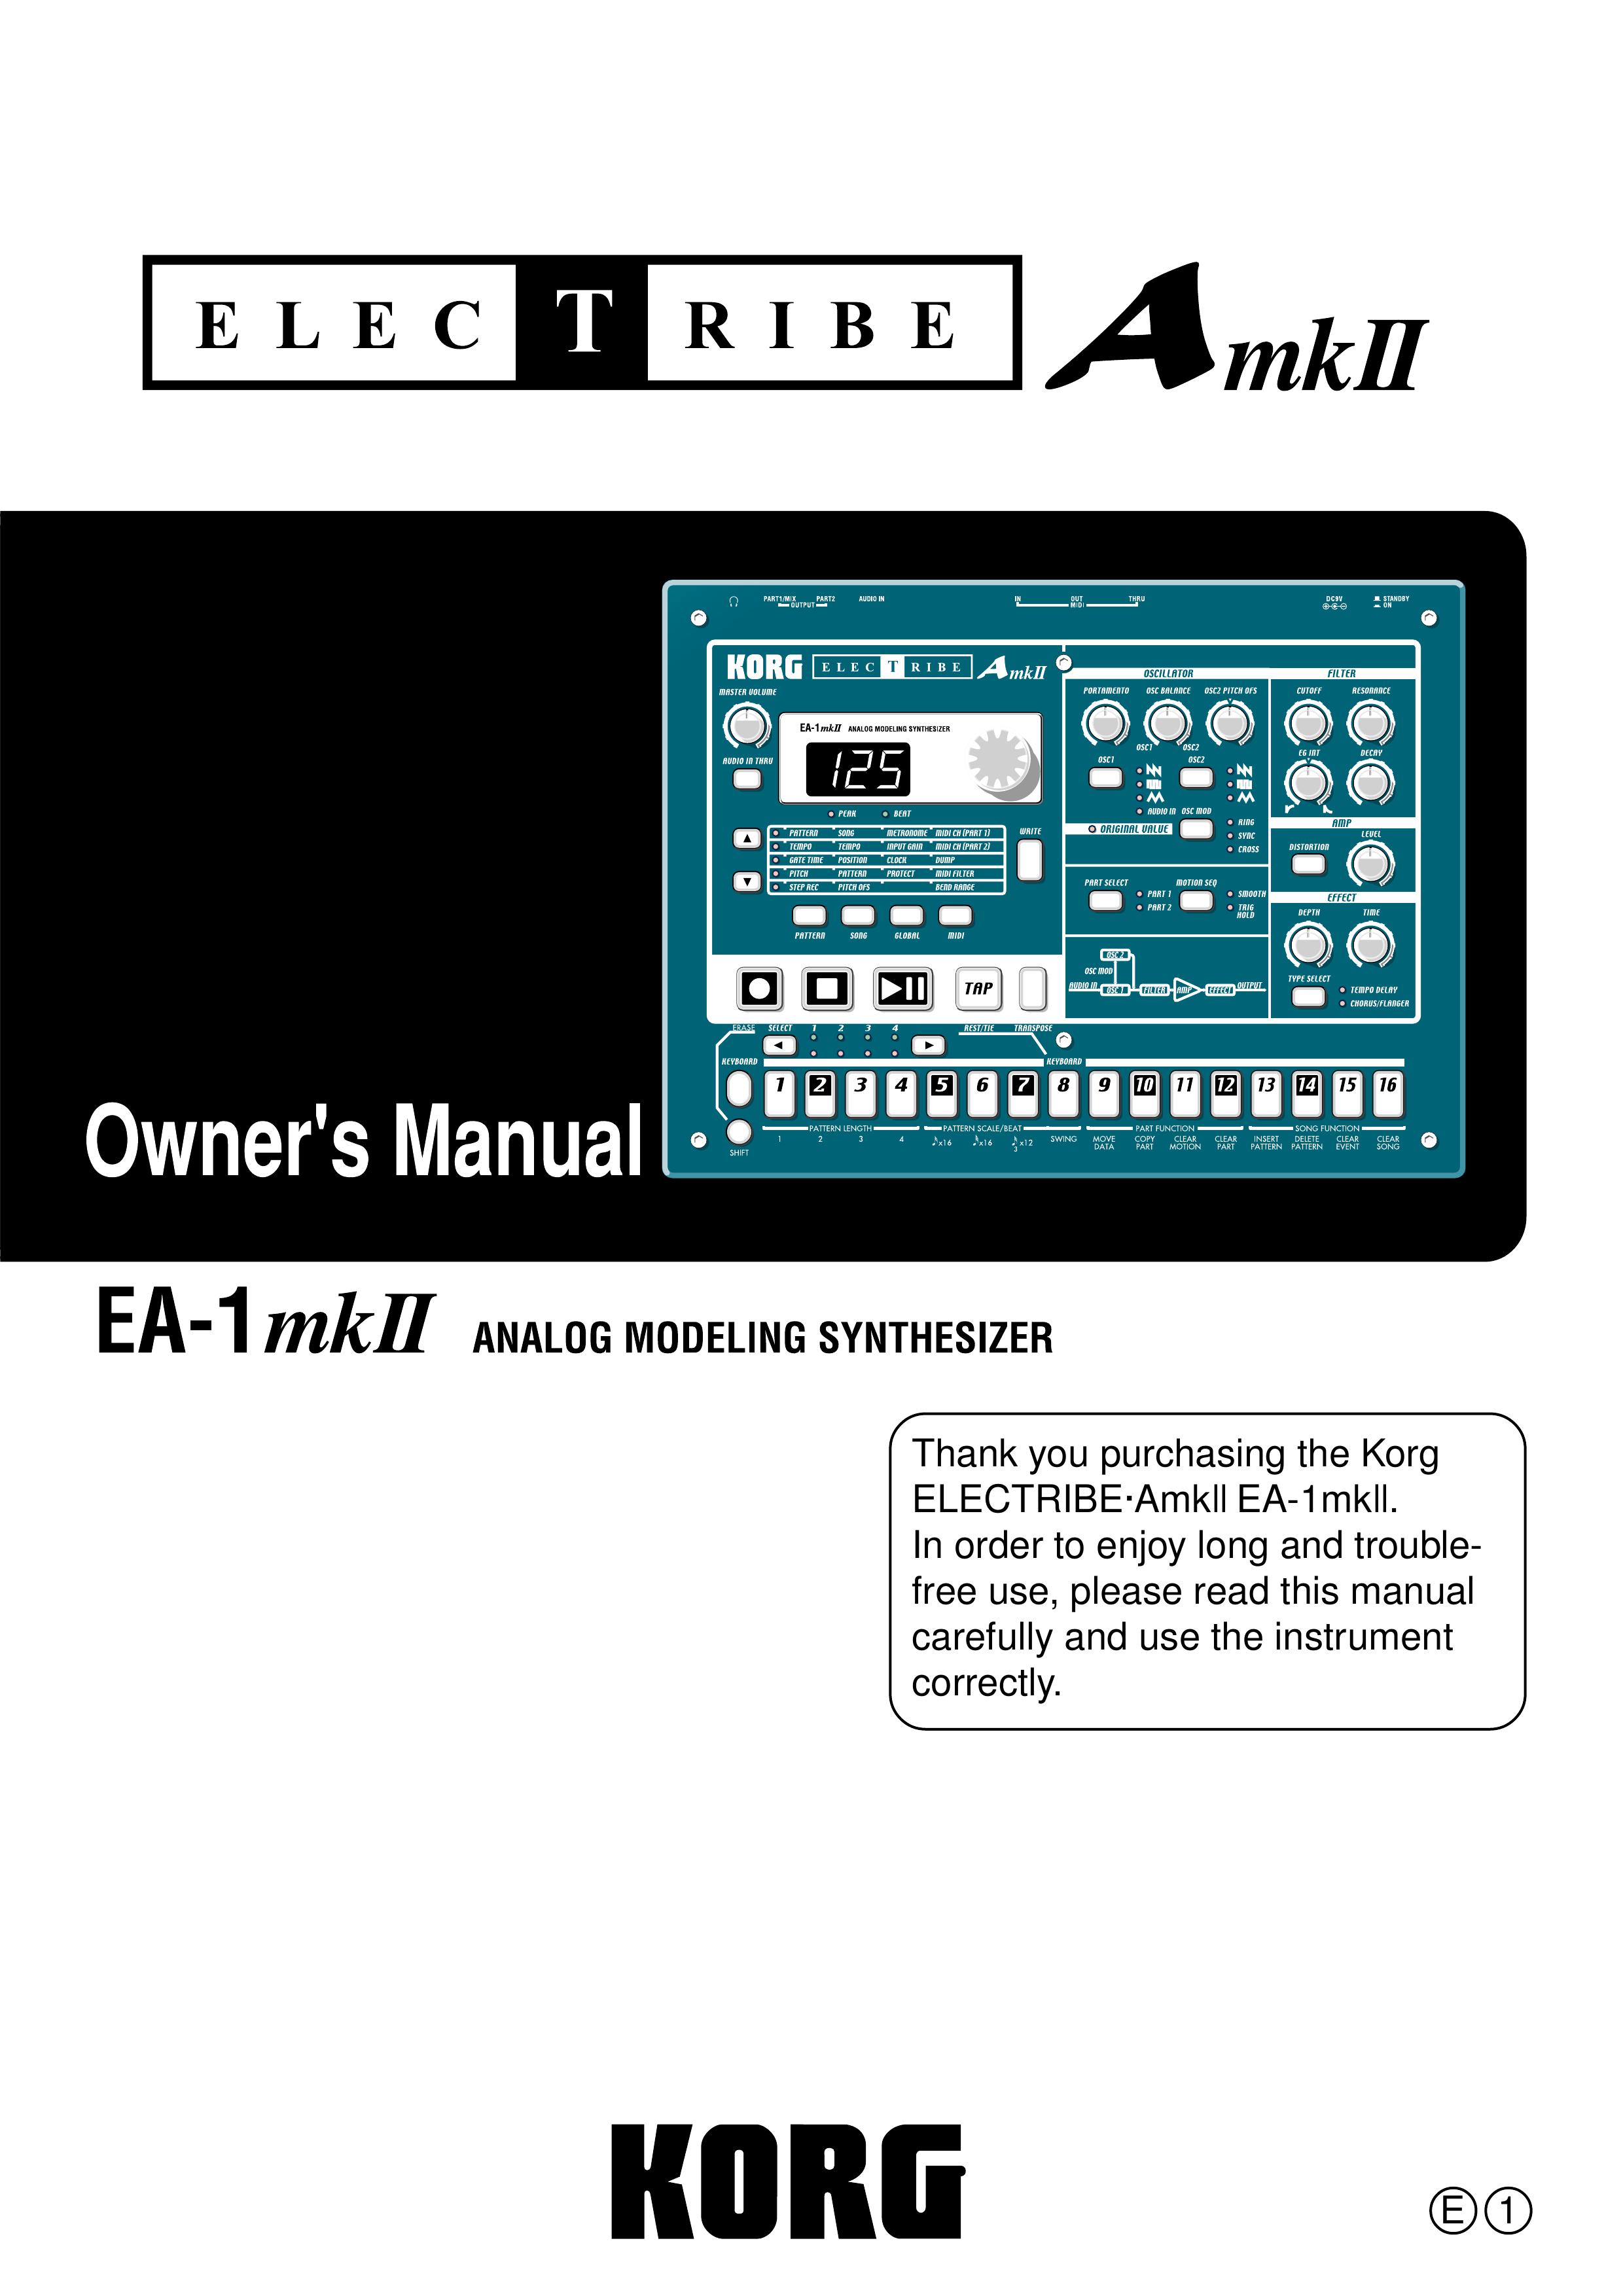 Korg AmkII Recording Equipment User Manual